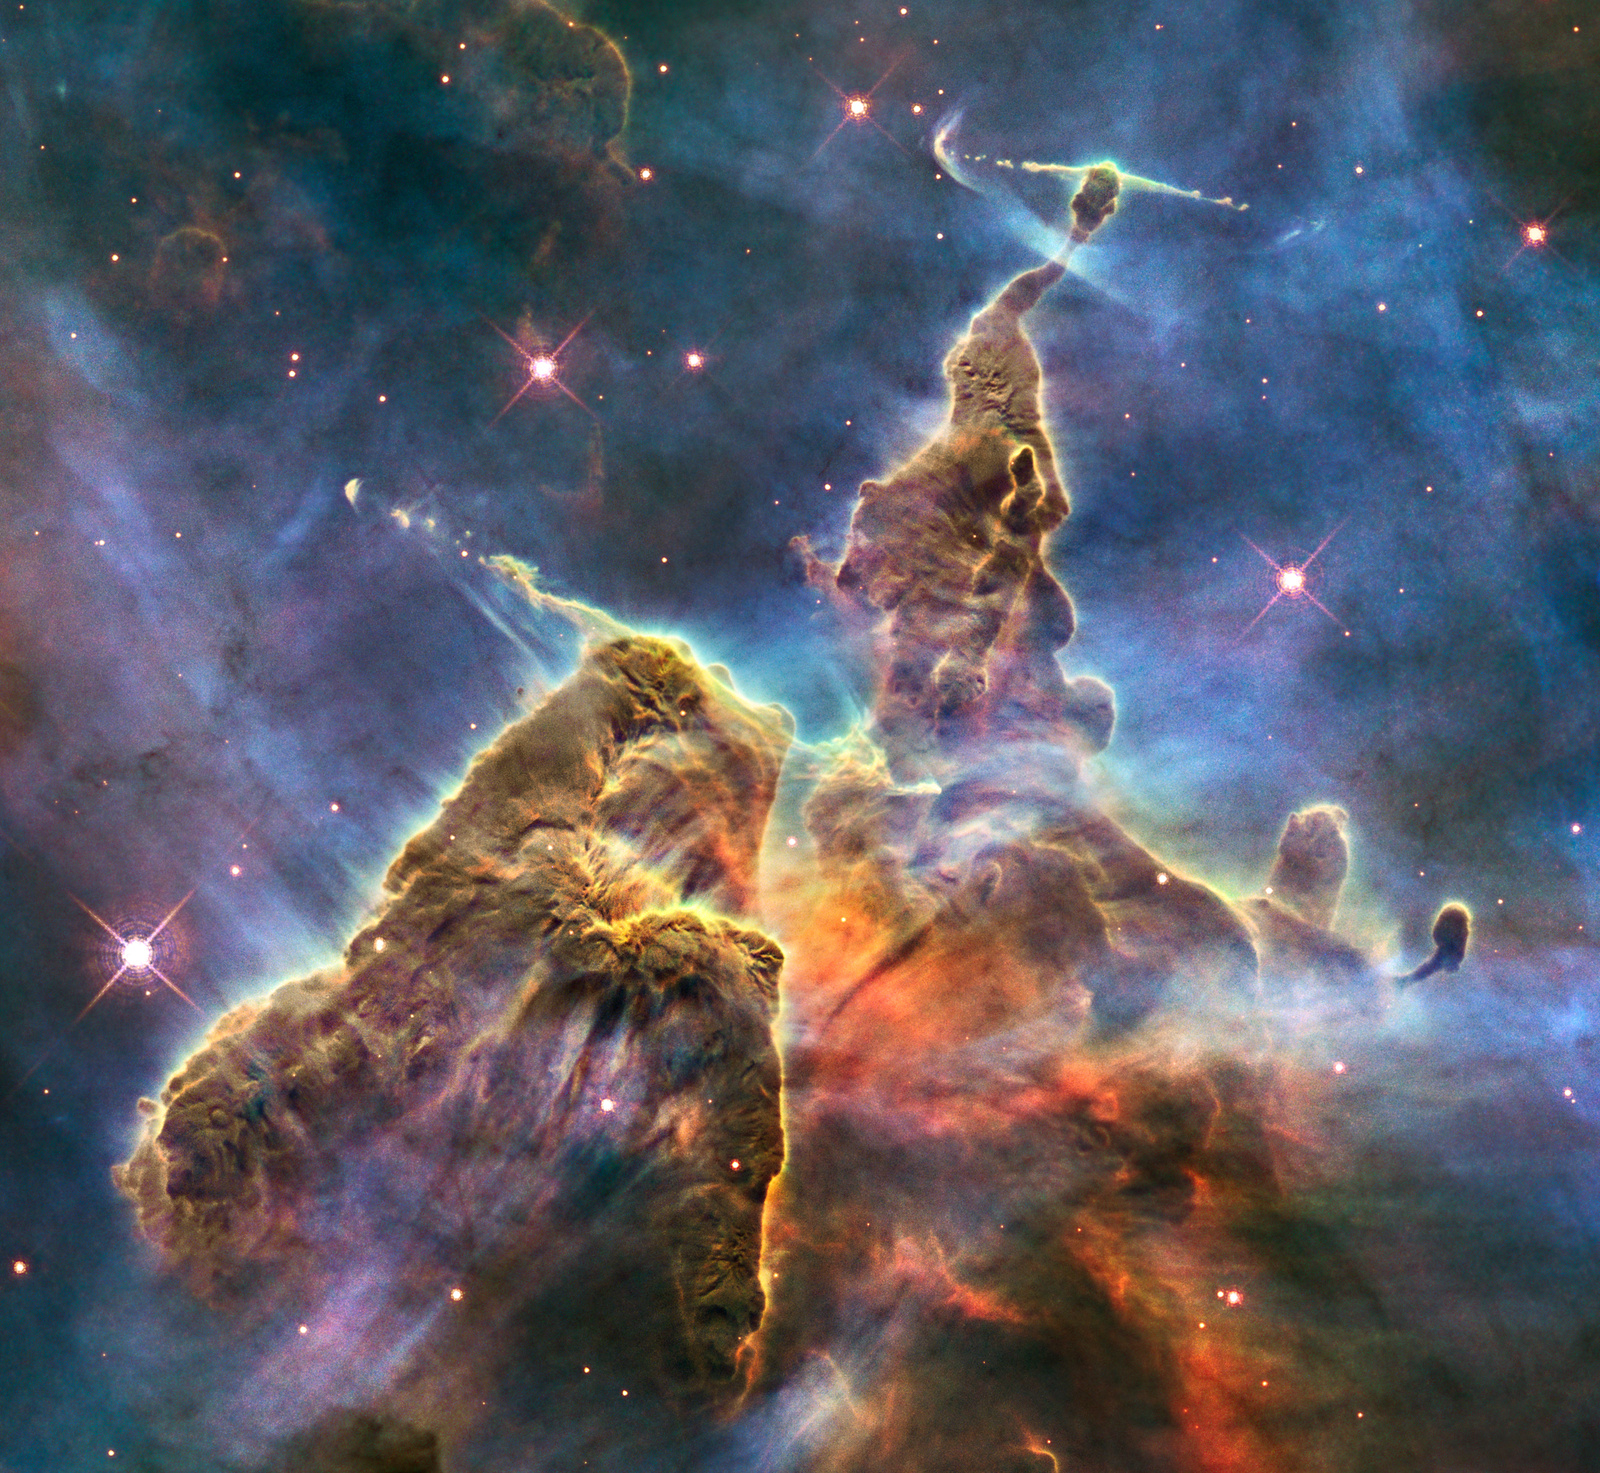 2010 April 26 - Dust Pillar of the Carina Nebula